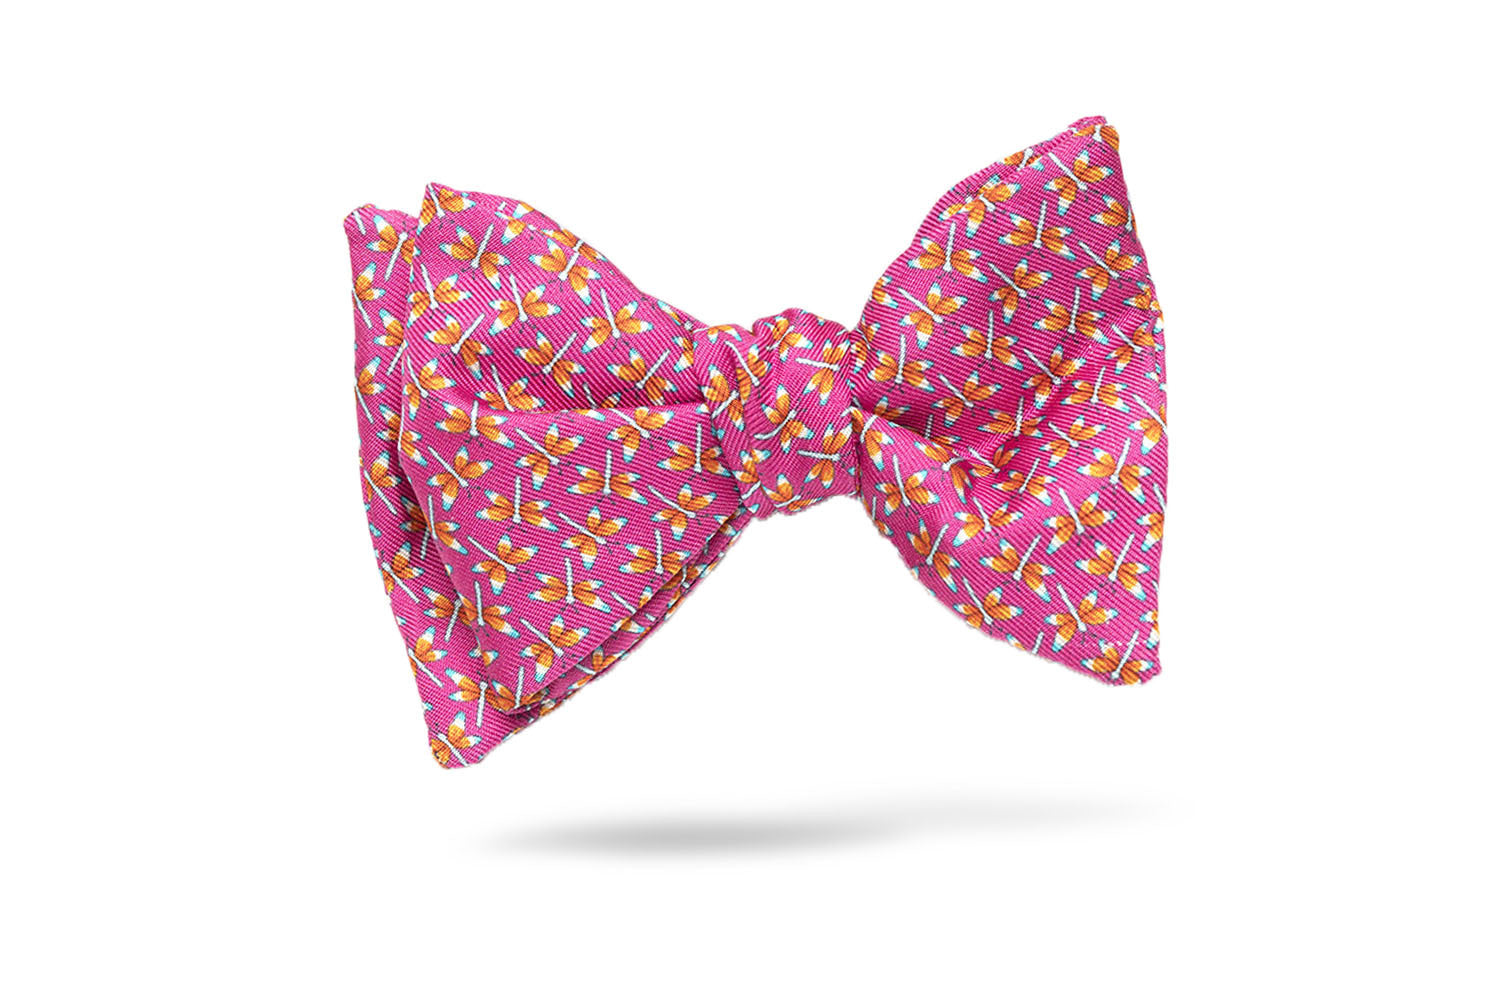 Pink Conversational 100% Silk Bow Tie - Nara